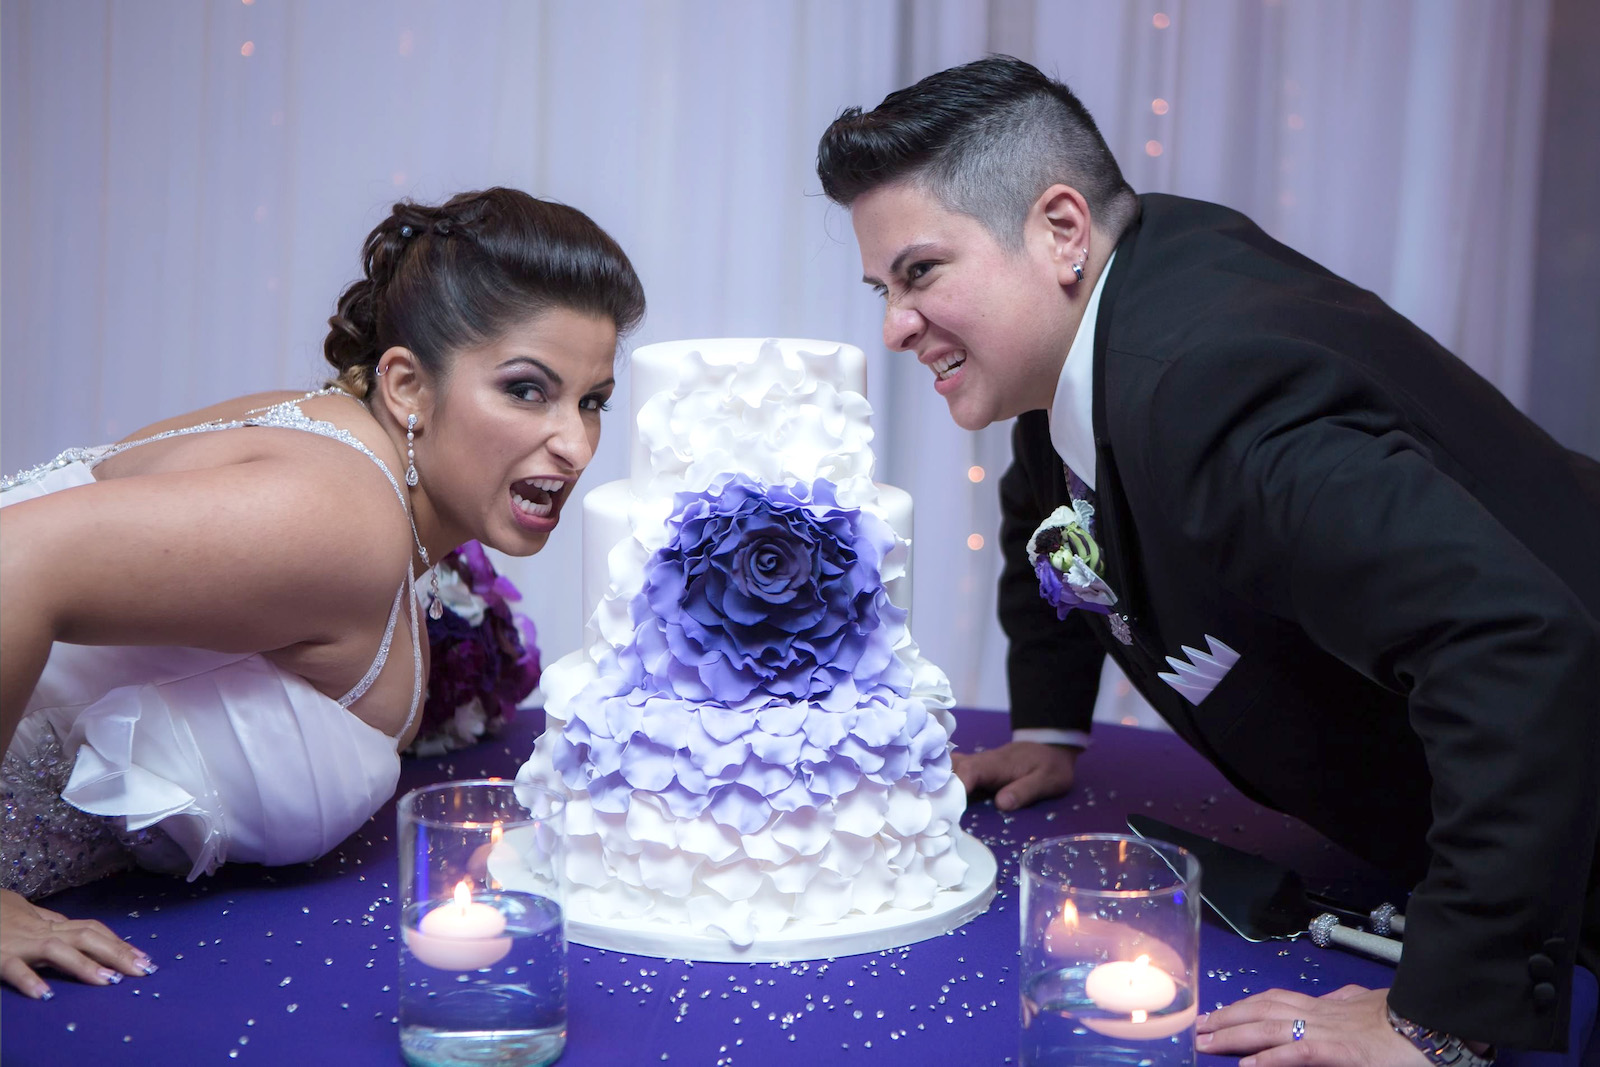 Room 1520 Chicago LGBTQ+ Wedding - Purple Ombre Wedding Cake. © Sylk Photography